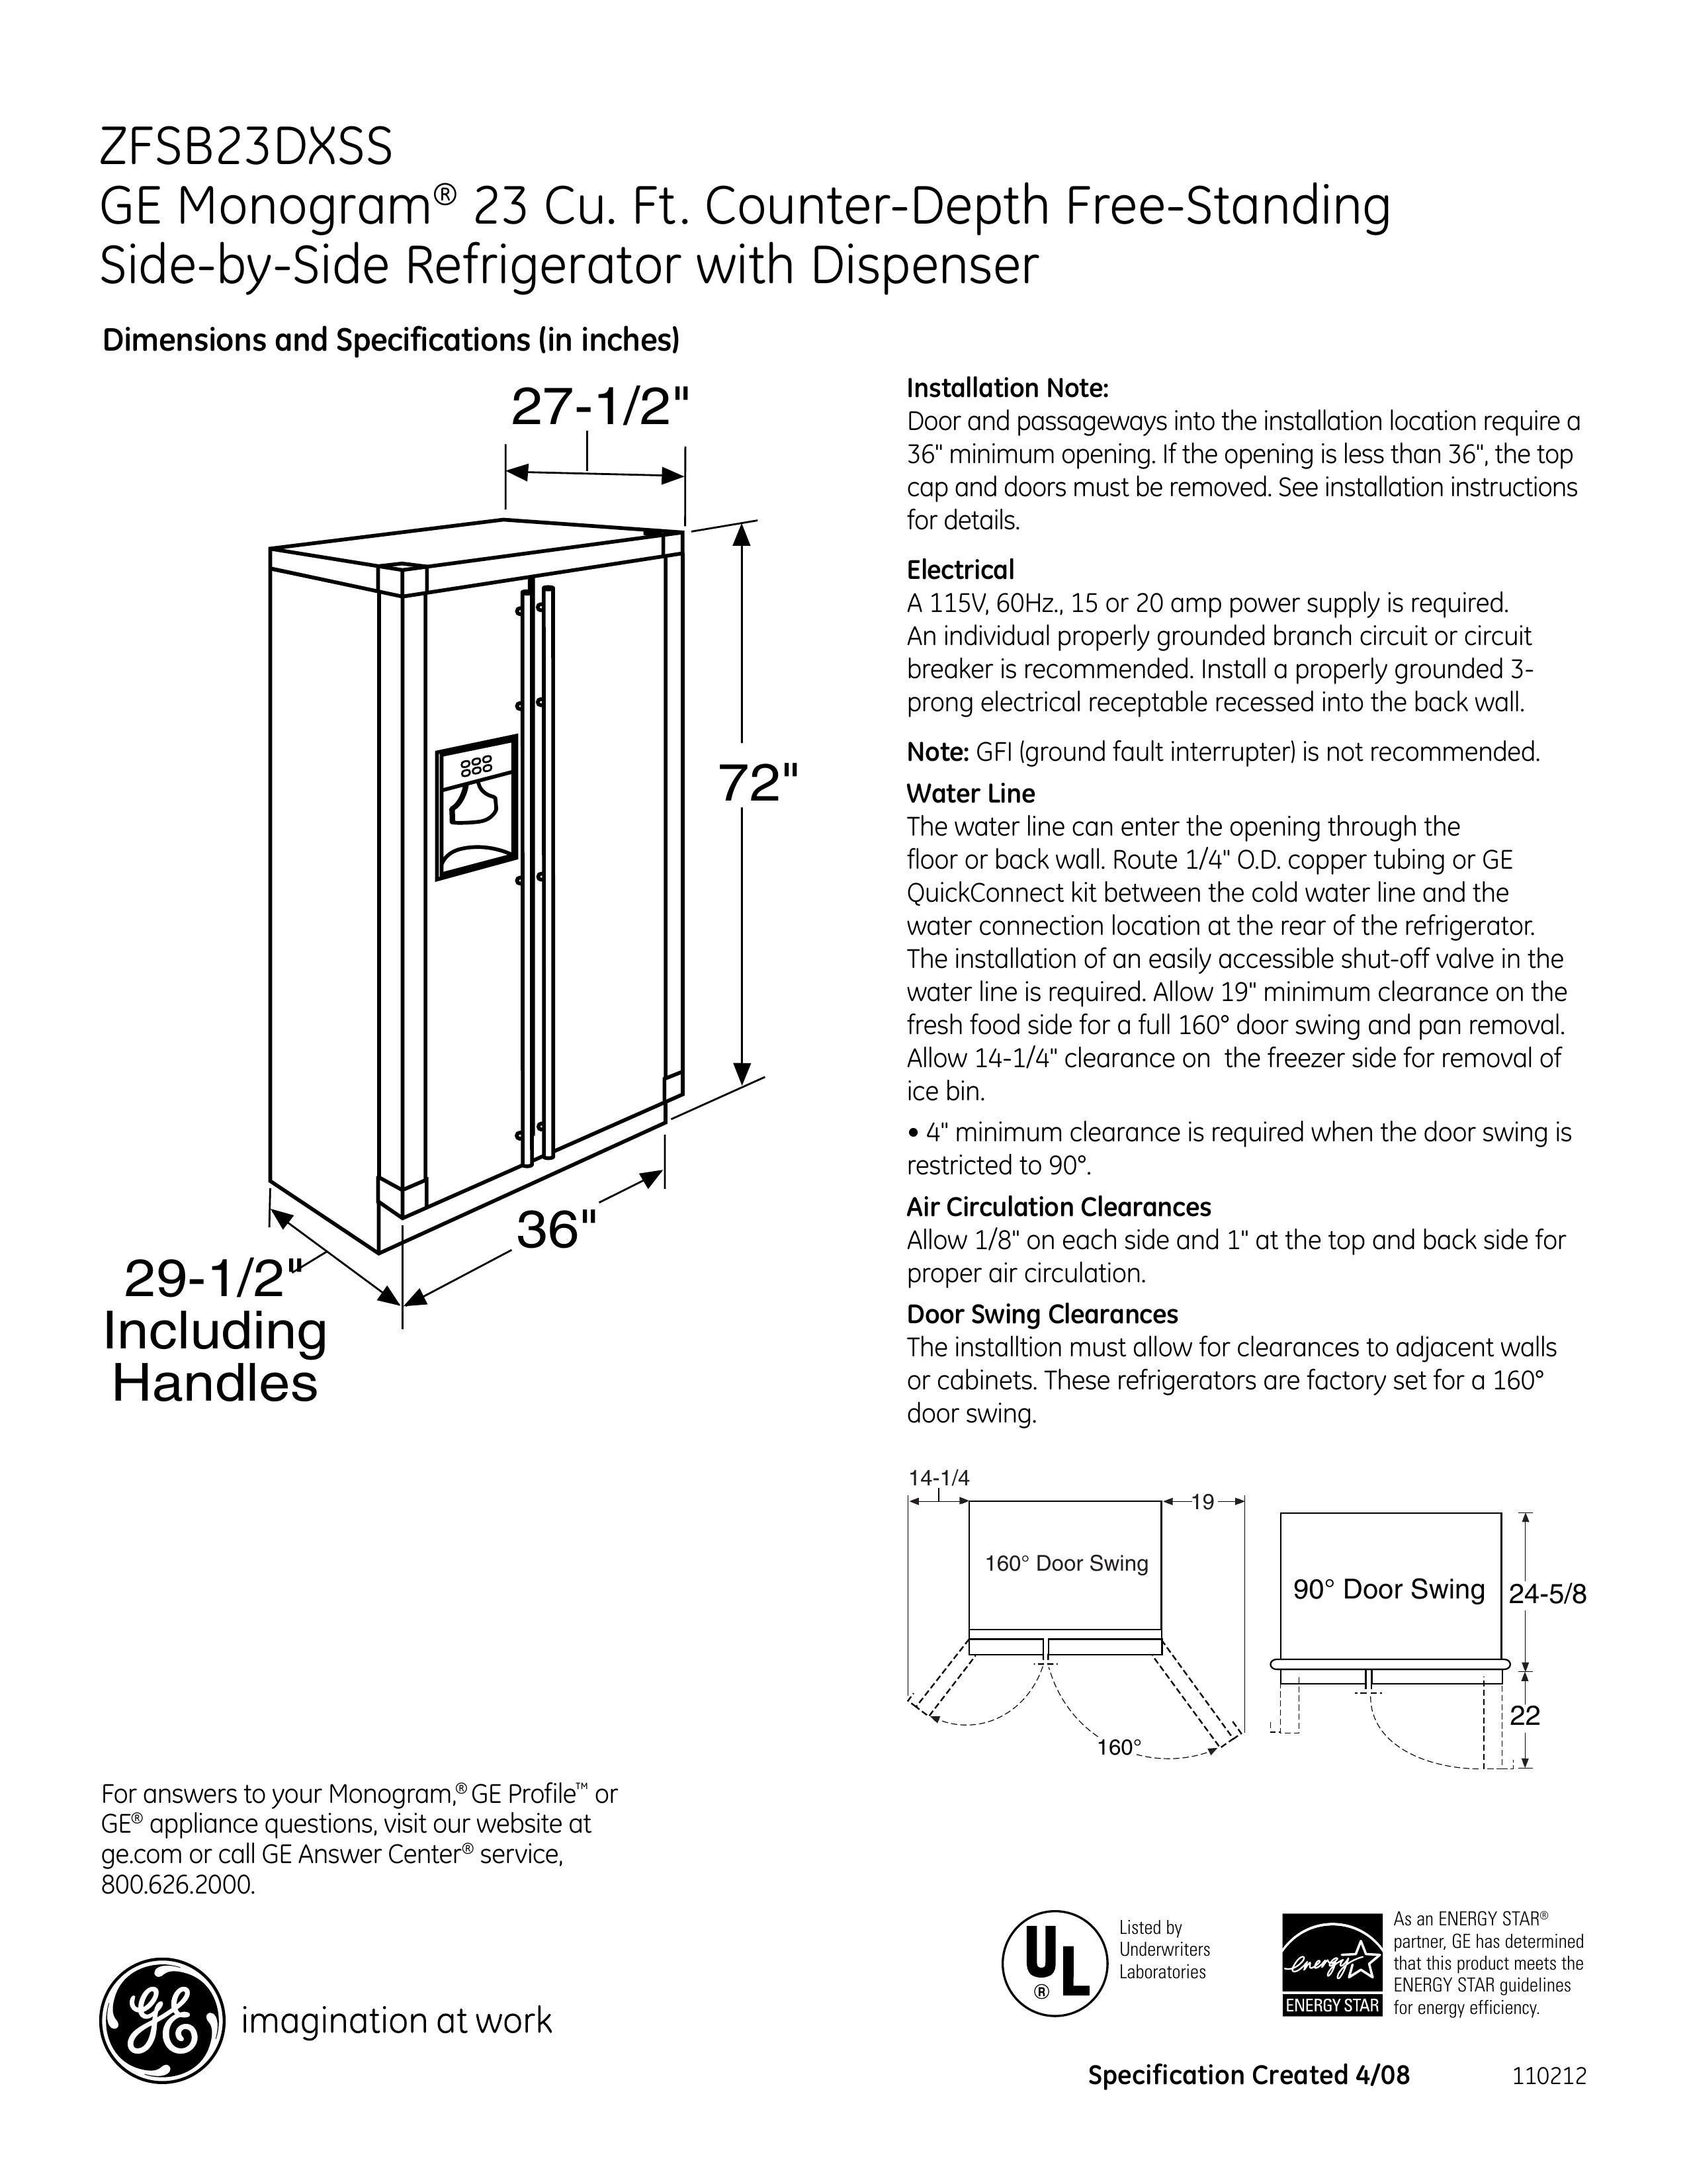 GE Monogram ZFSB23DXSS Refrigerator User Manual